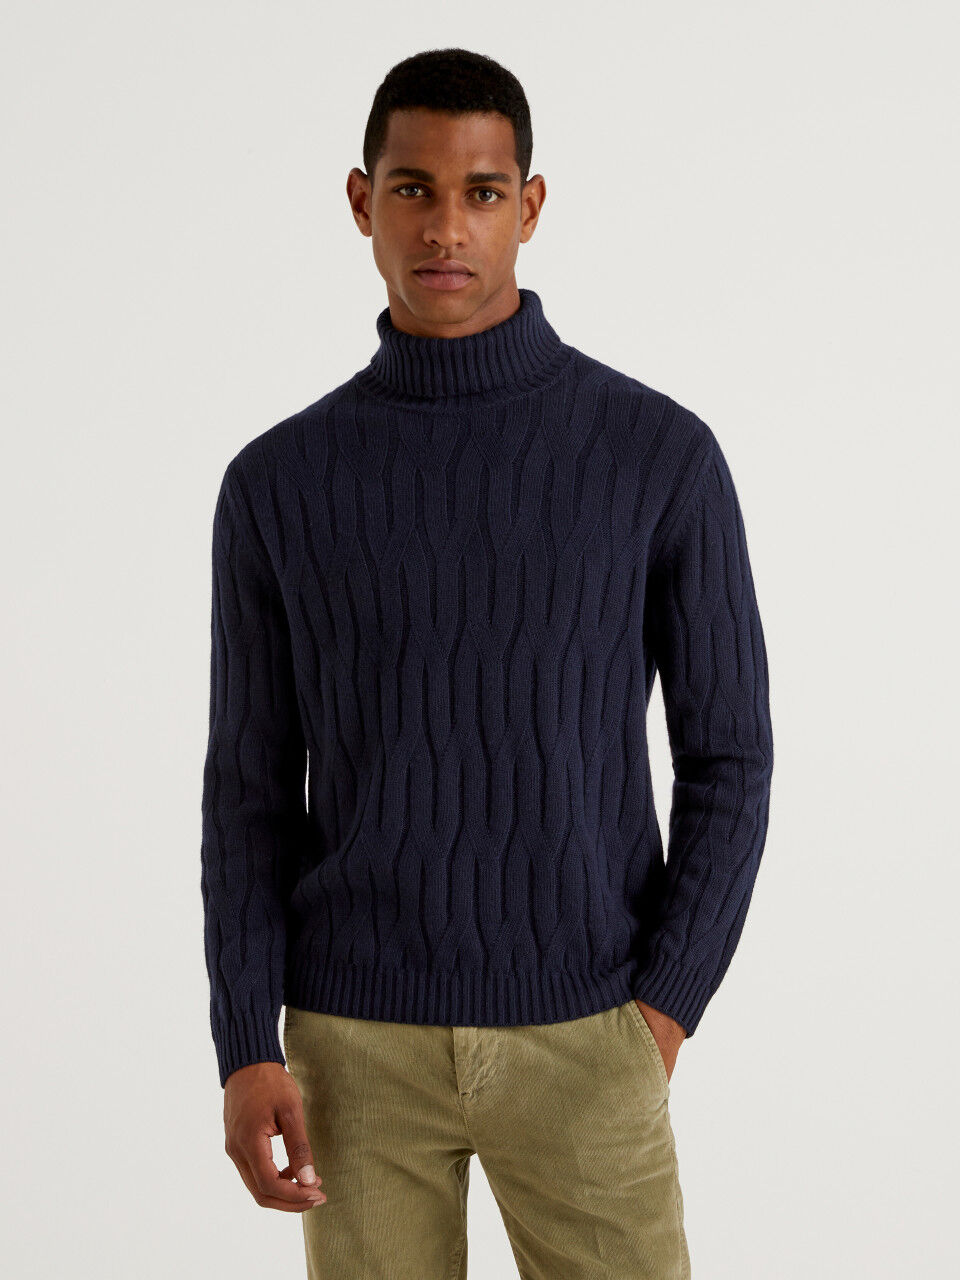 H&M jumper discount 88% Black XL MEN FASHION Jumpers & Sweatshirts Print 